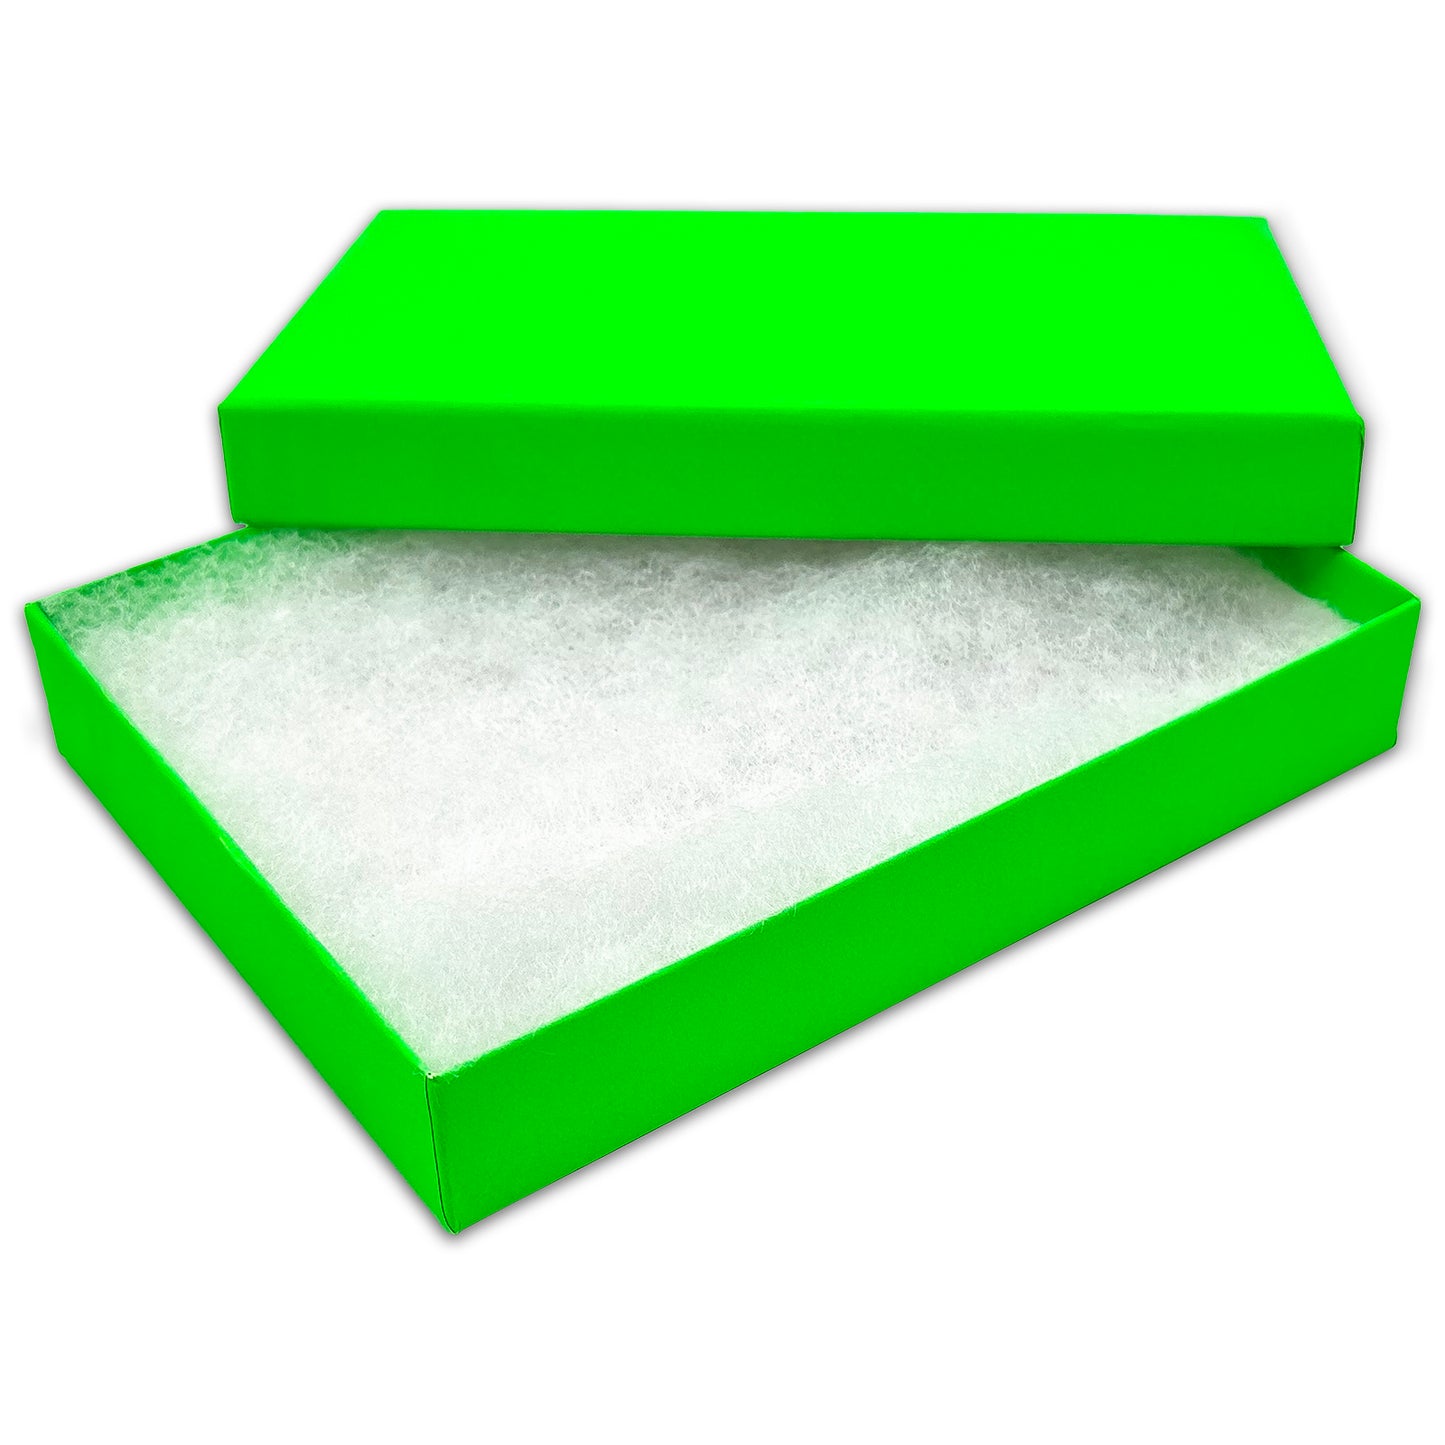 5 7/16" x 3 15/16" x 1" Neon Green Cotton Filled Paper Box